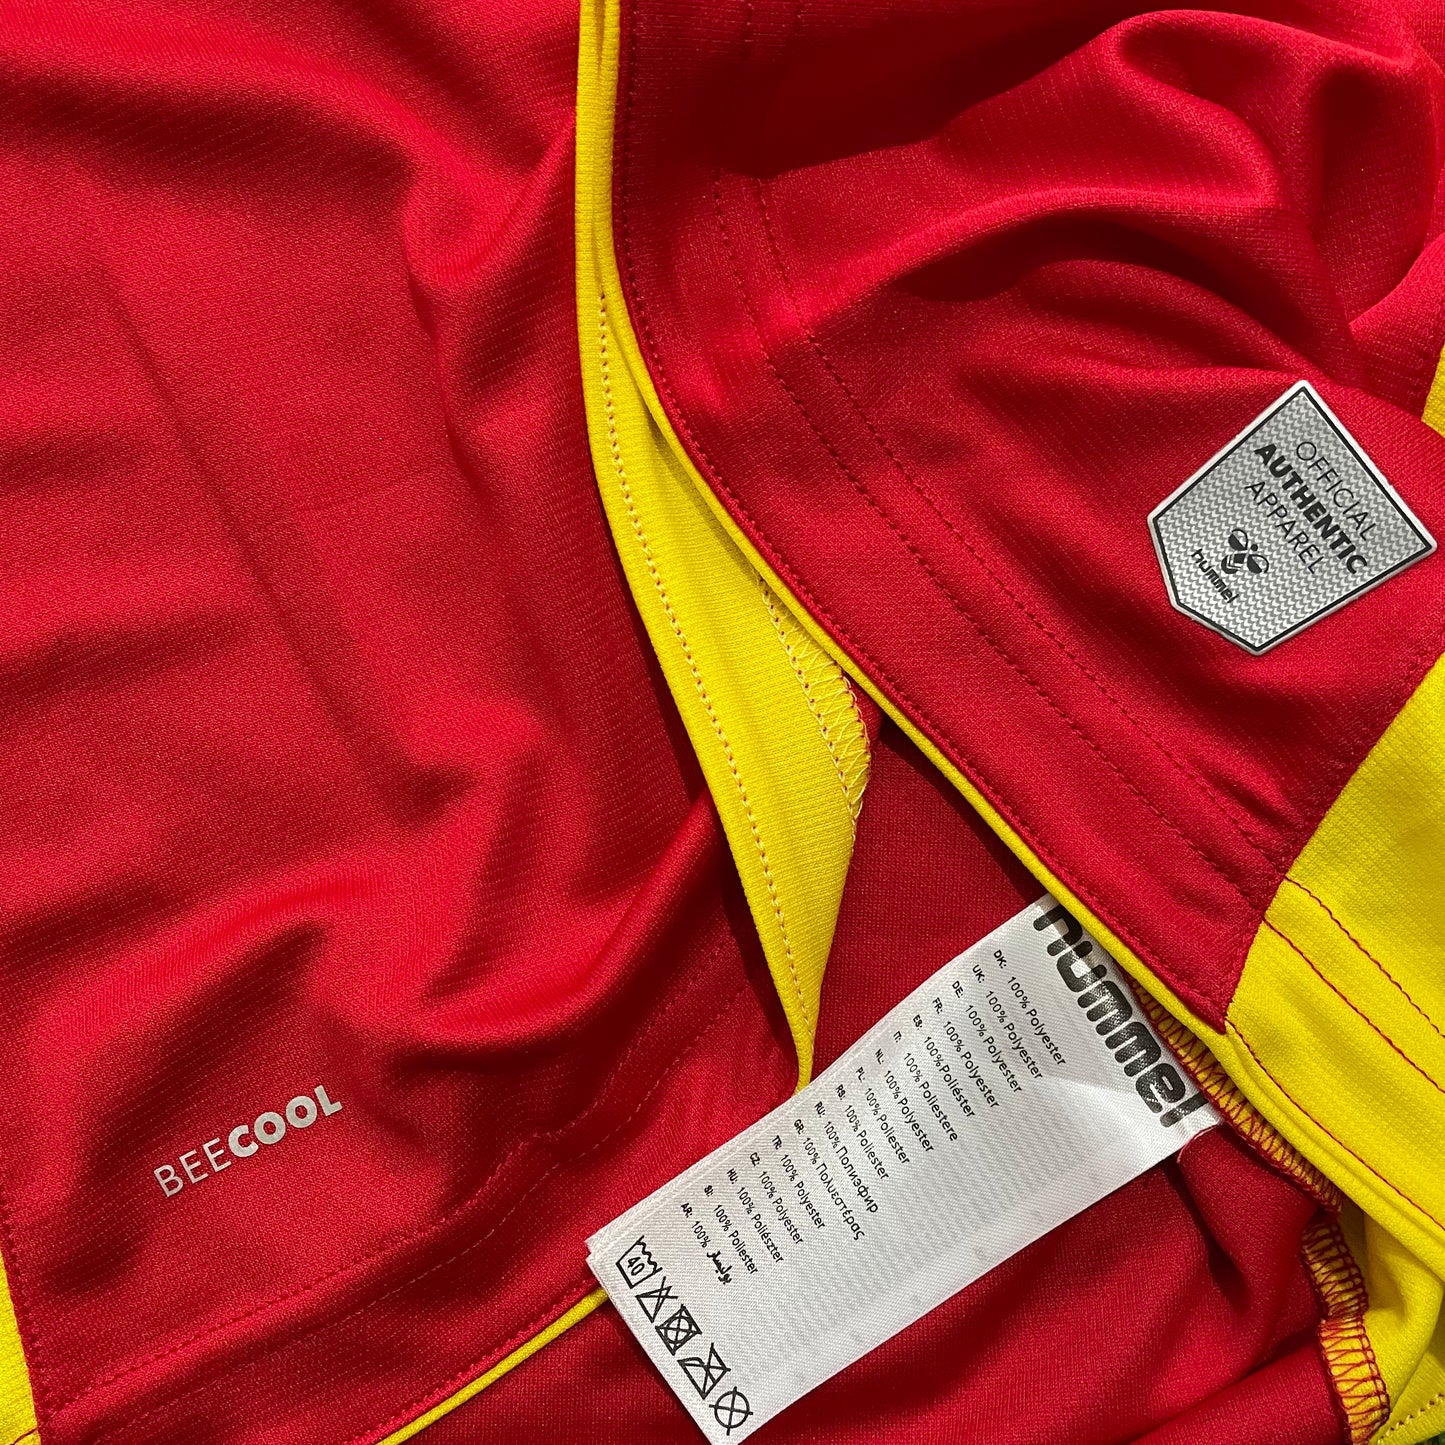 <tc>2019-2020 Las Palmas camiseta visitante #28 Pedri (XL)</tc>